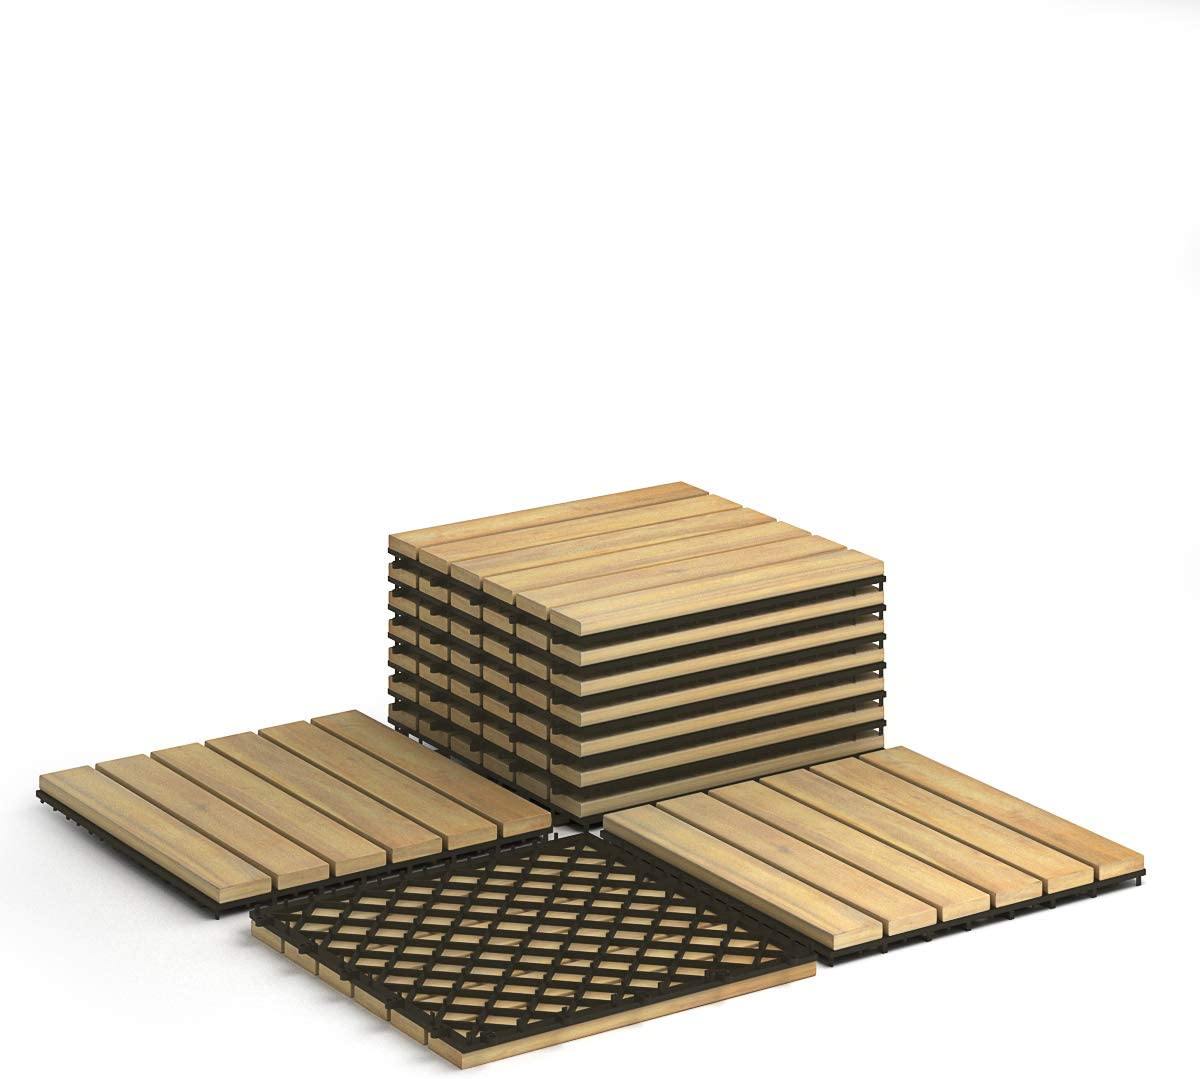 Giantex 27 PCS Interlocking Patio Deck Tiles, 12 x 12in Acacia Hardwood Floor Tiles, Tools Free Assembly